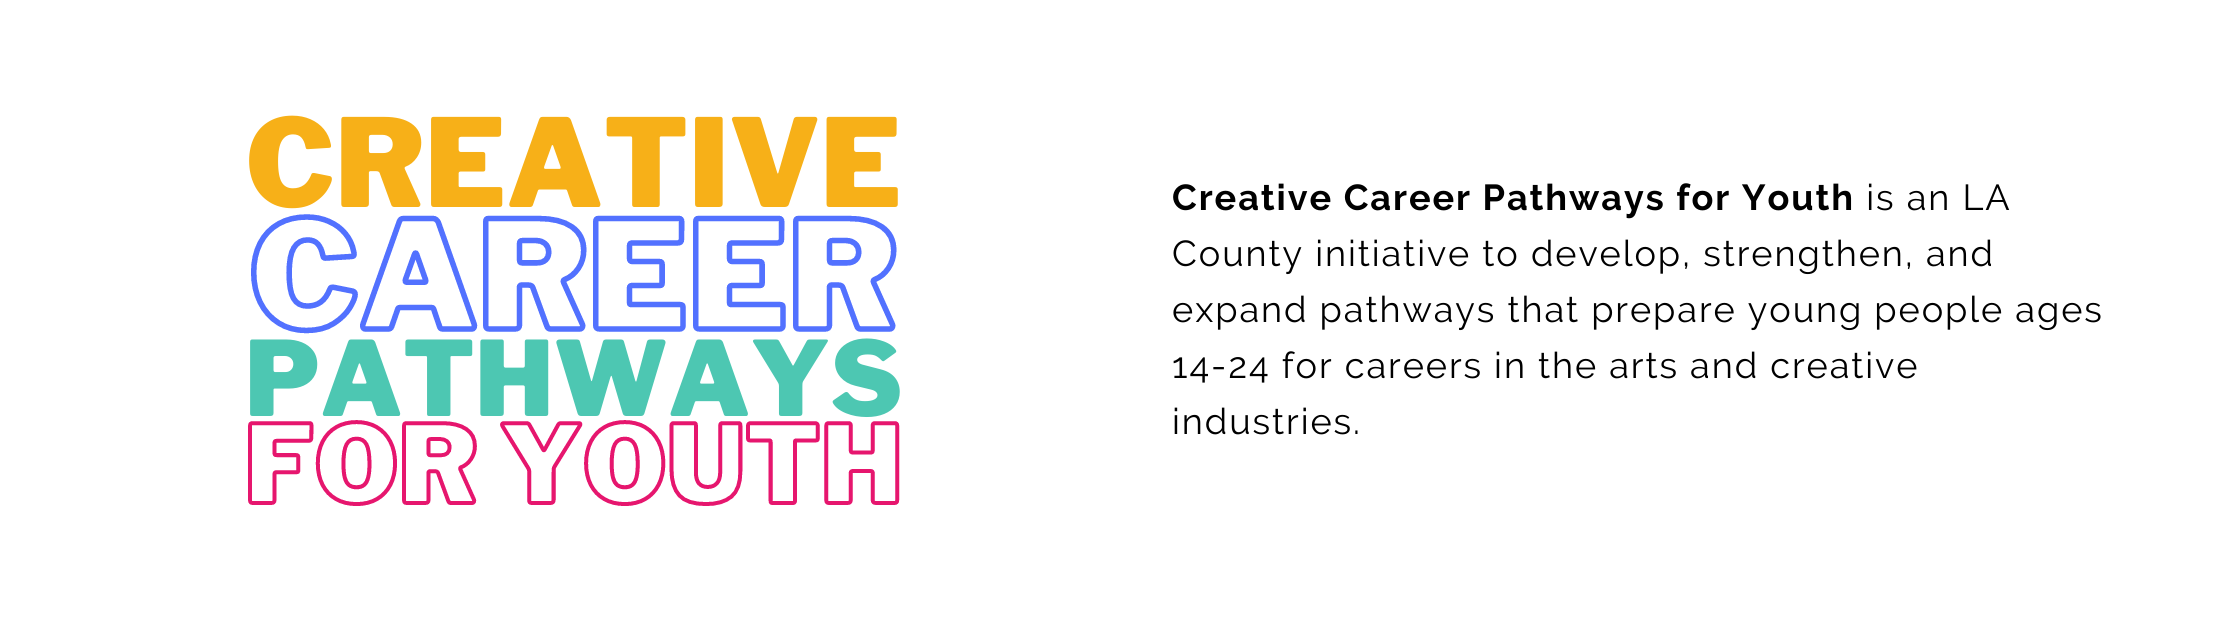 Creative Career Pathways